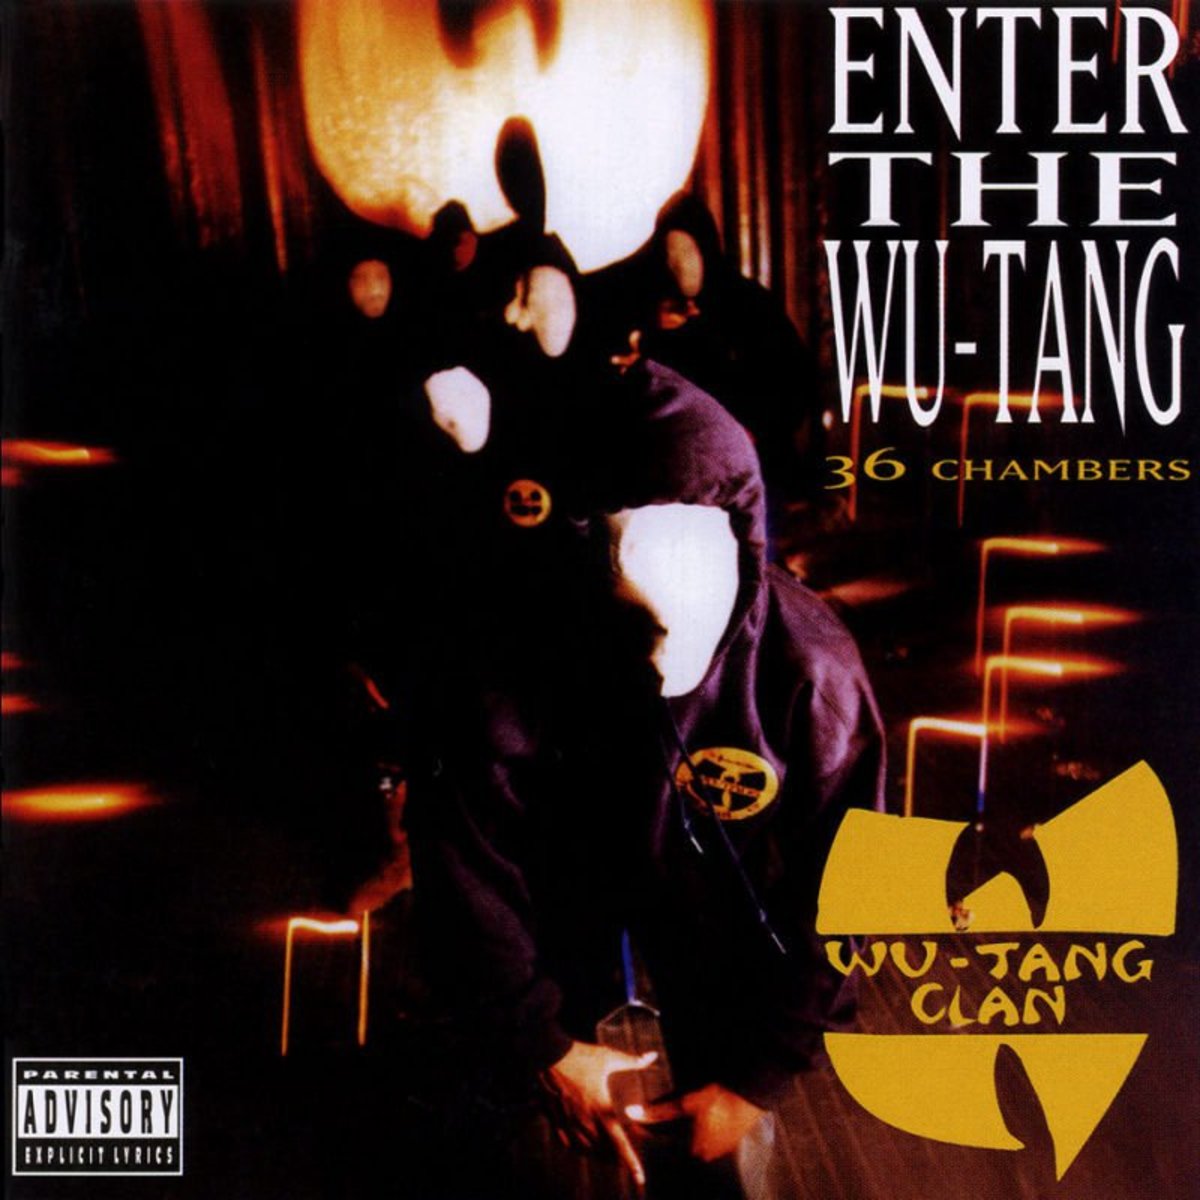 Cover-Artwork für das Debüt-Studioalbum des Wu-Tang-Clans mit dem Titel Enter The Wu-Tang (36 Chambers). Foto: BMG-Unterhaltung.